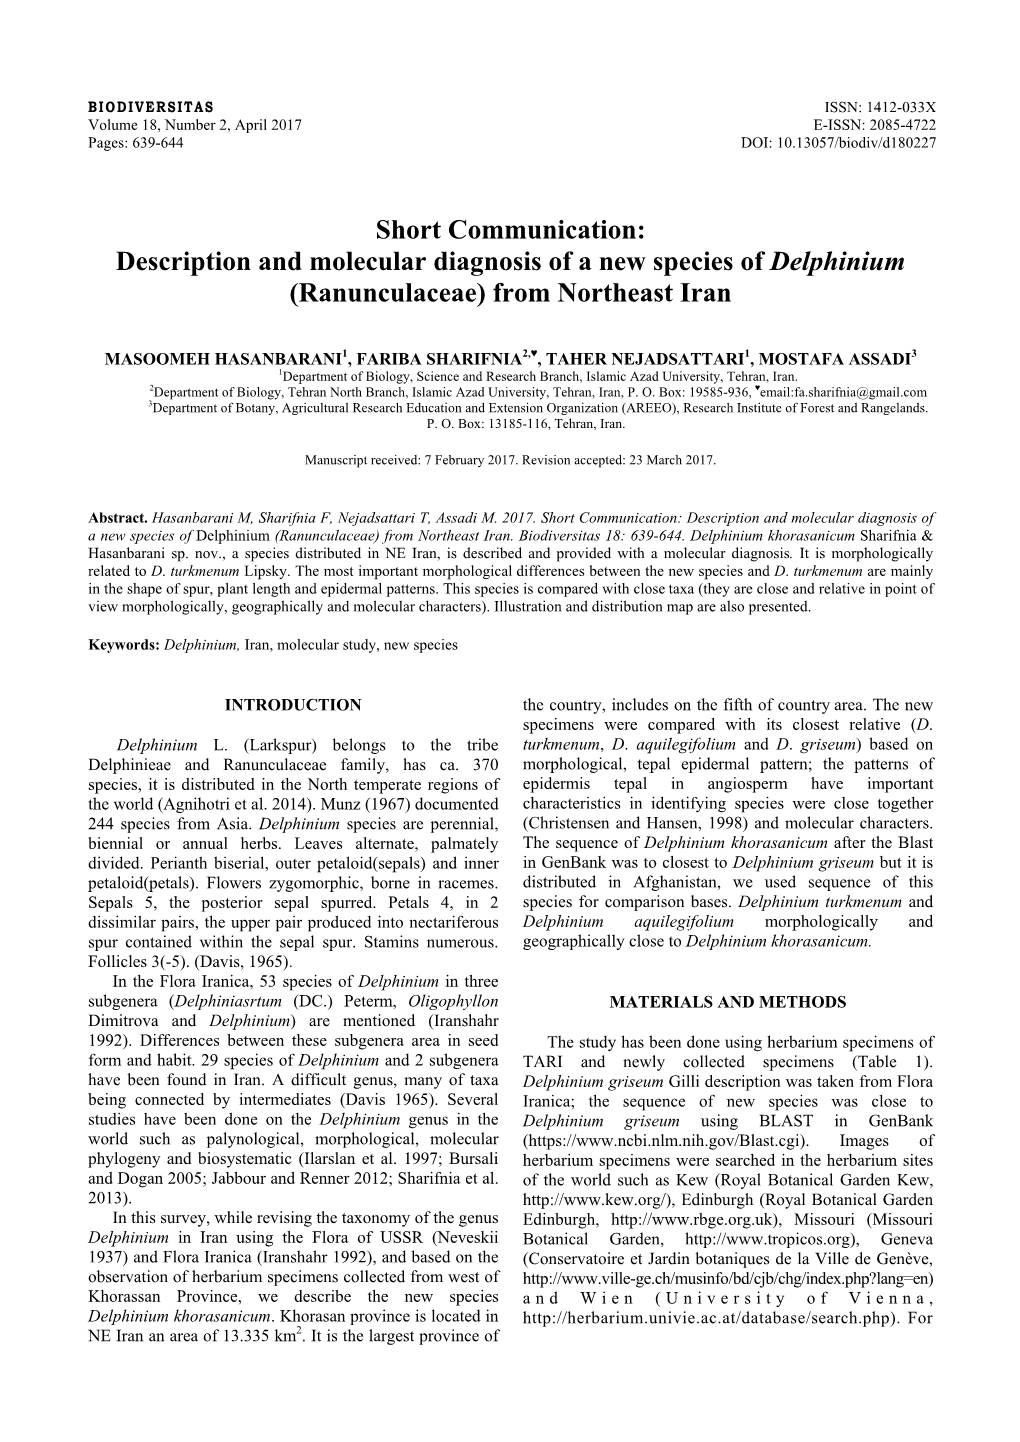 Description and Molecular Diagnosis of a New Species of Delphinium (Ranunculaceae) from Northeast Iran